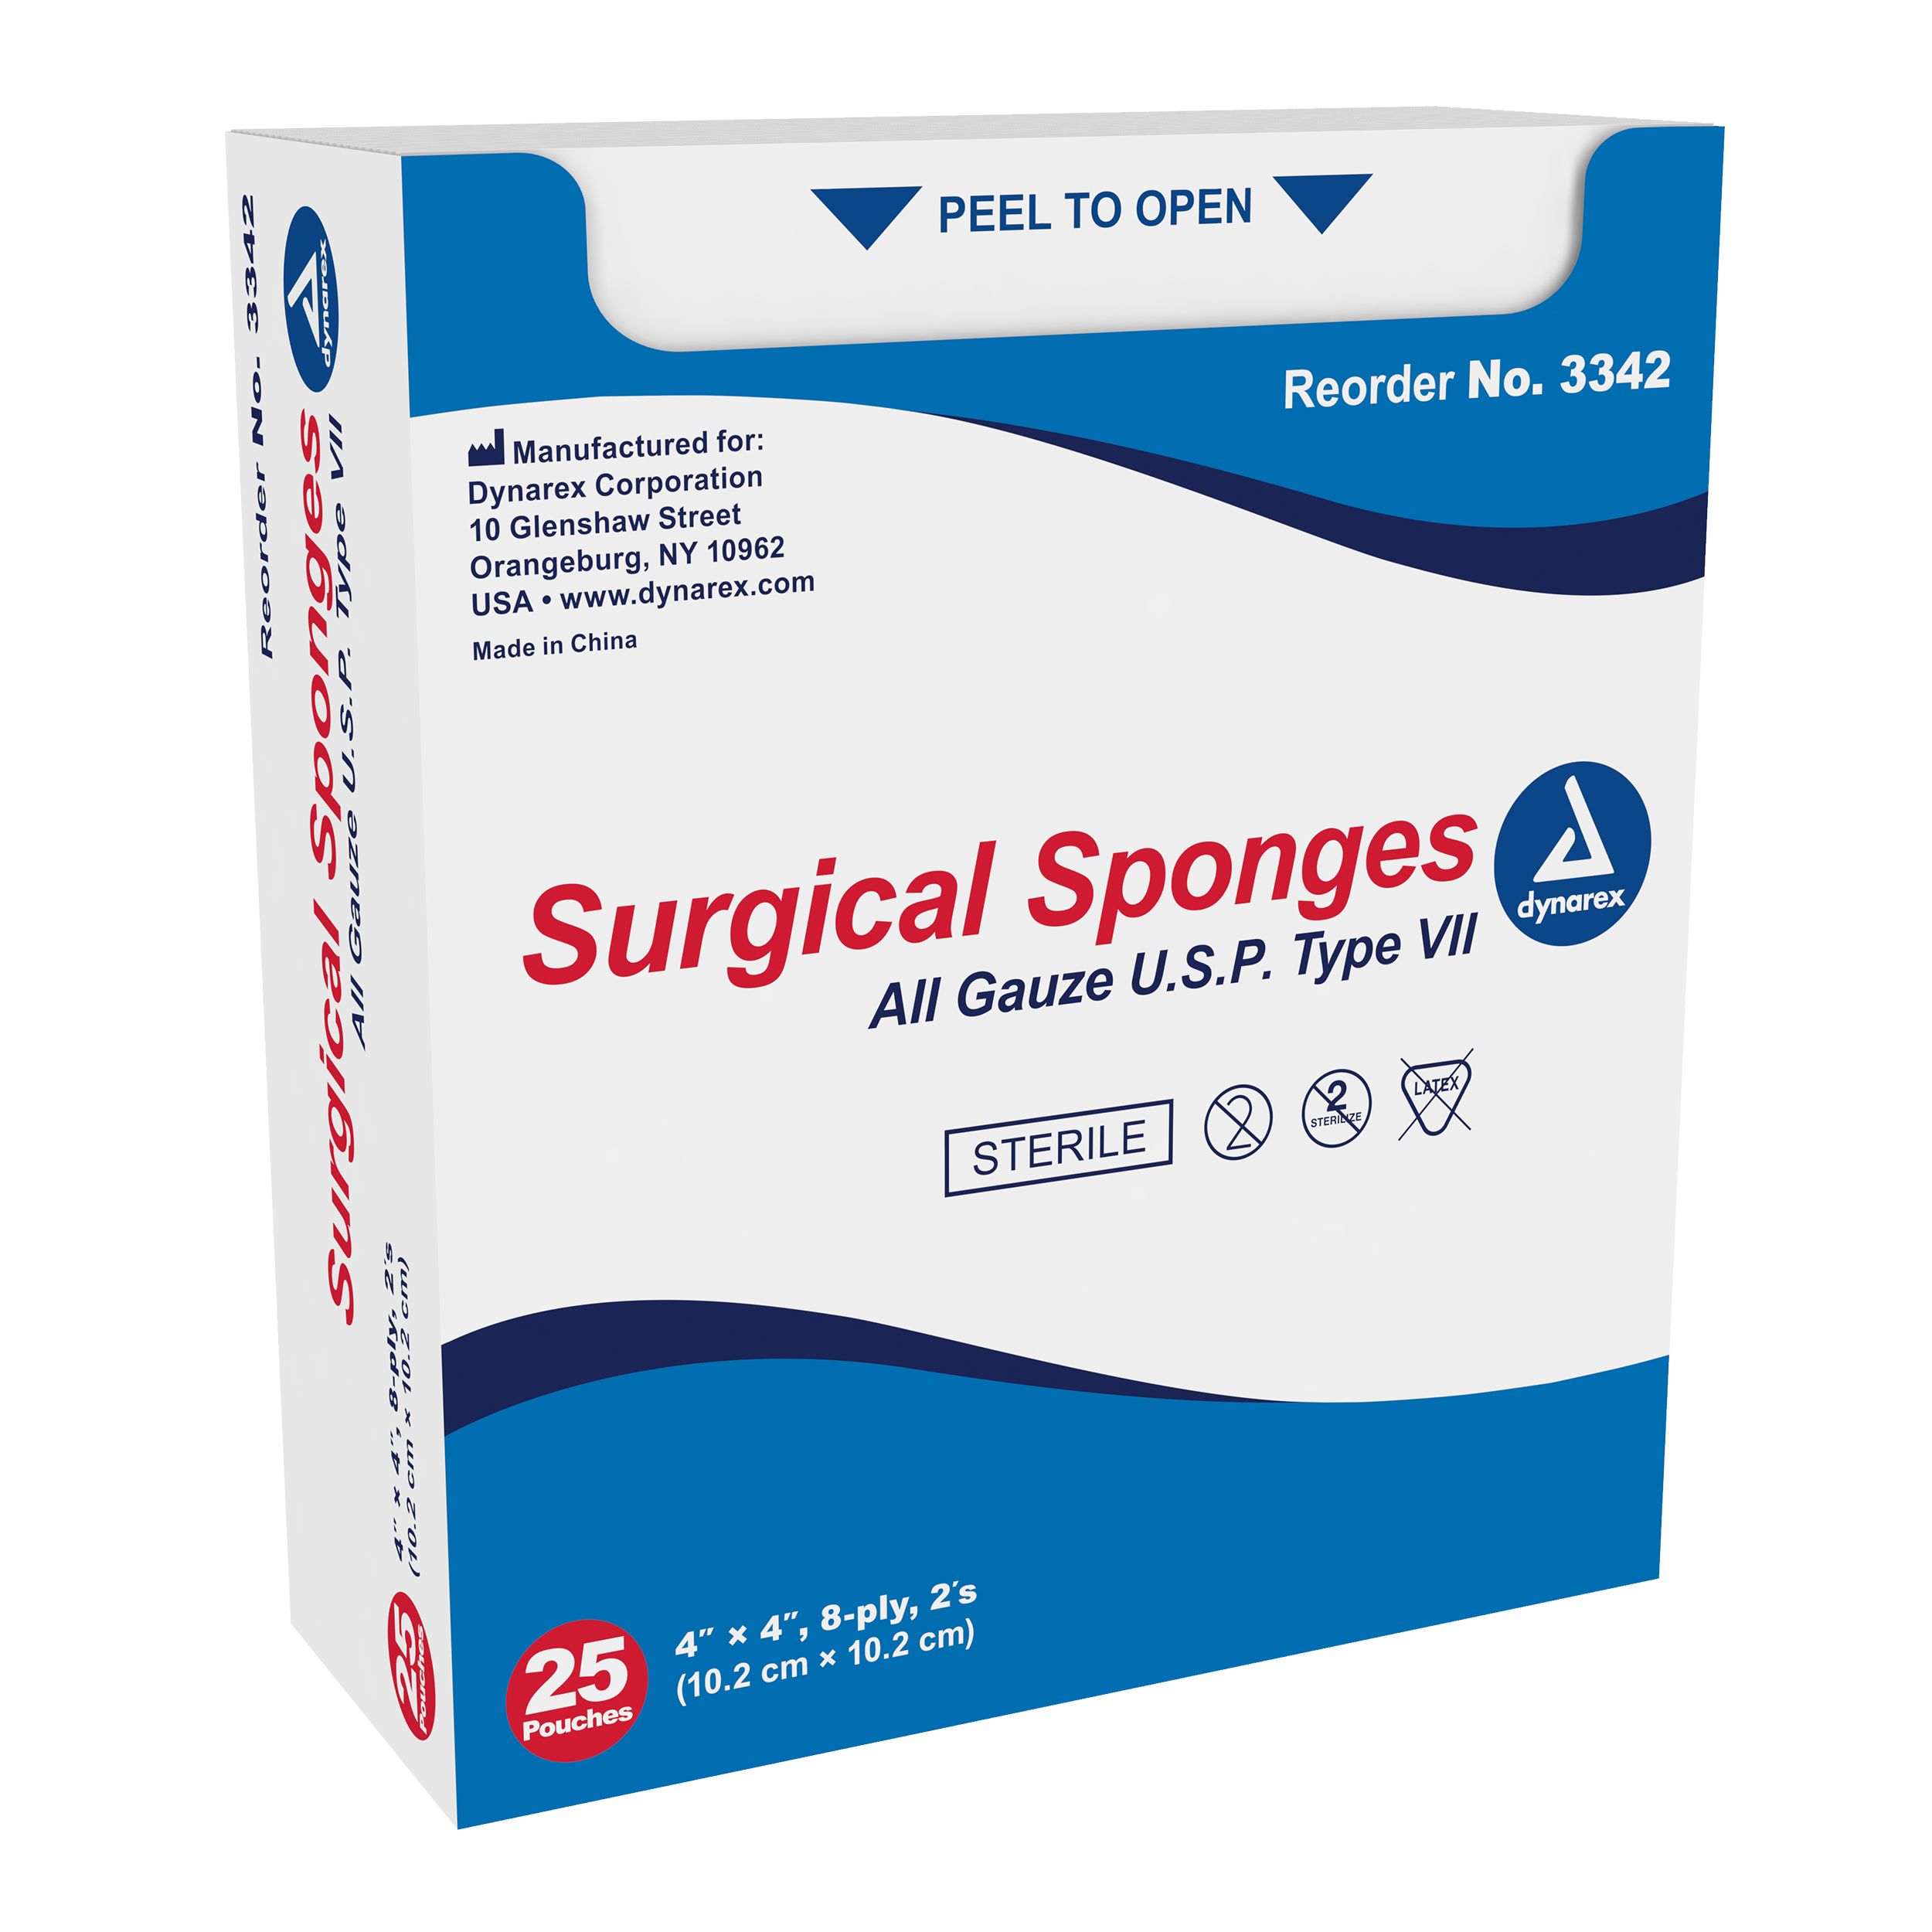 Surgical Gauze Sponge Sterile 2's 4